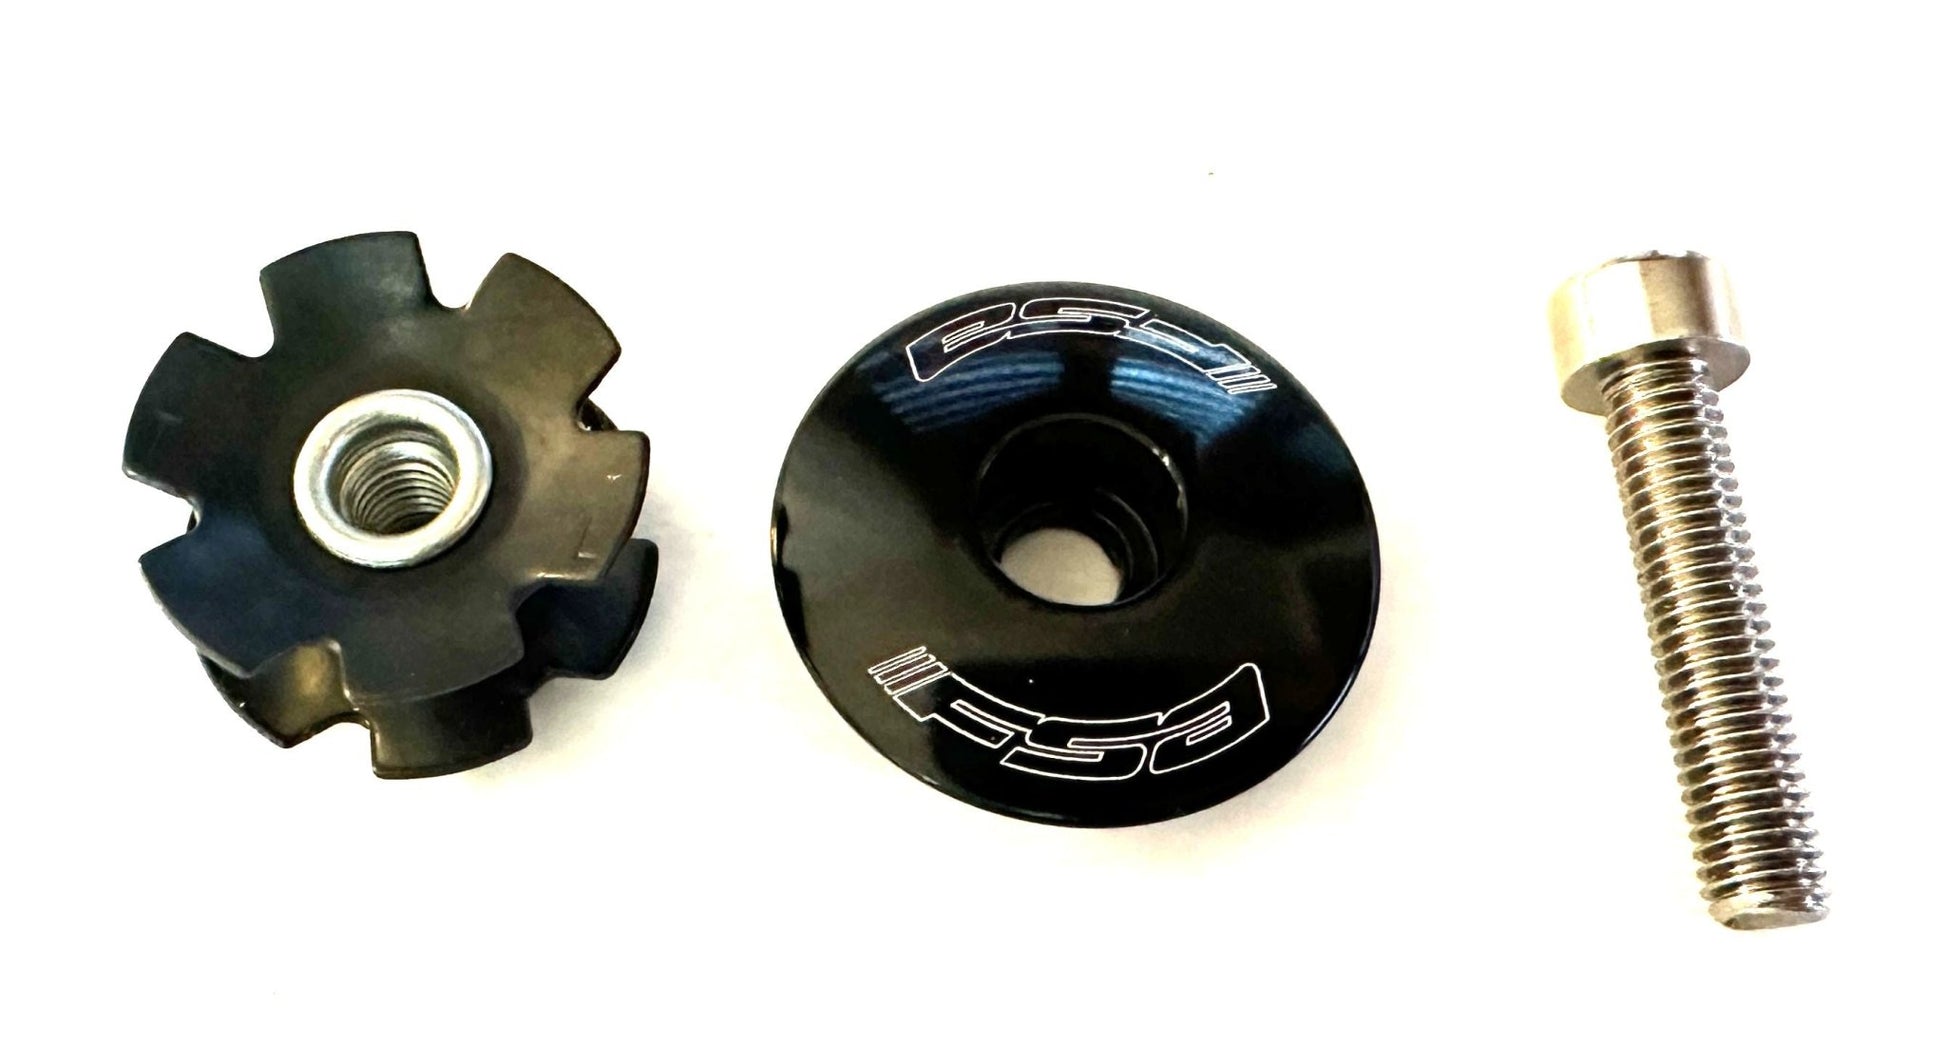 FSA Bicycle Bike Black Alloy Headset Star Nut & Top Cap Set 1-1/8" New - Random Bike Parts